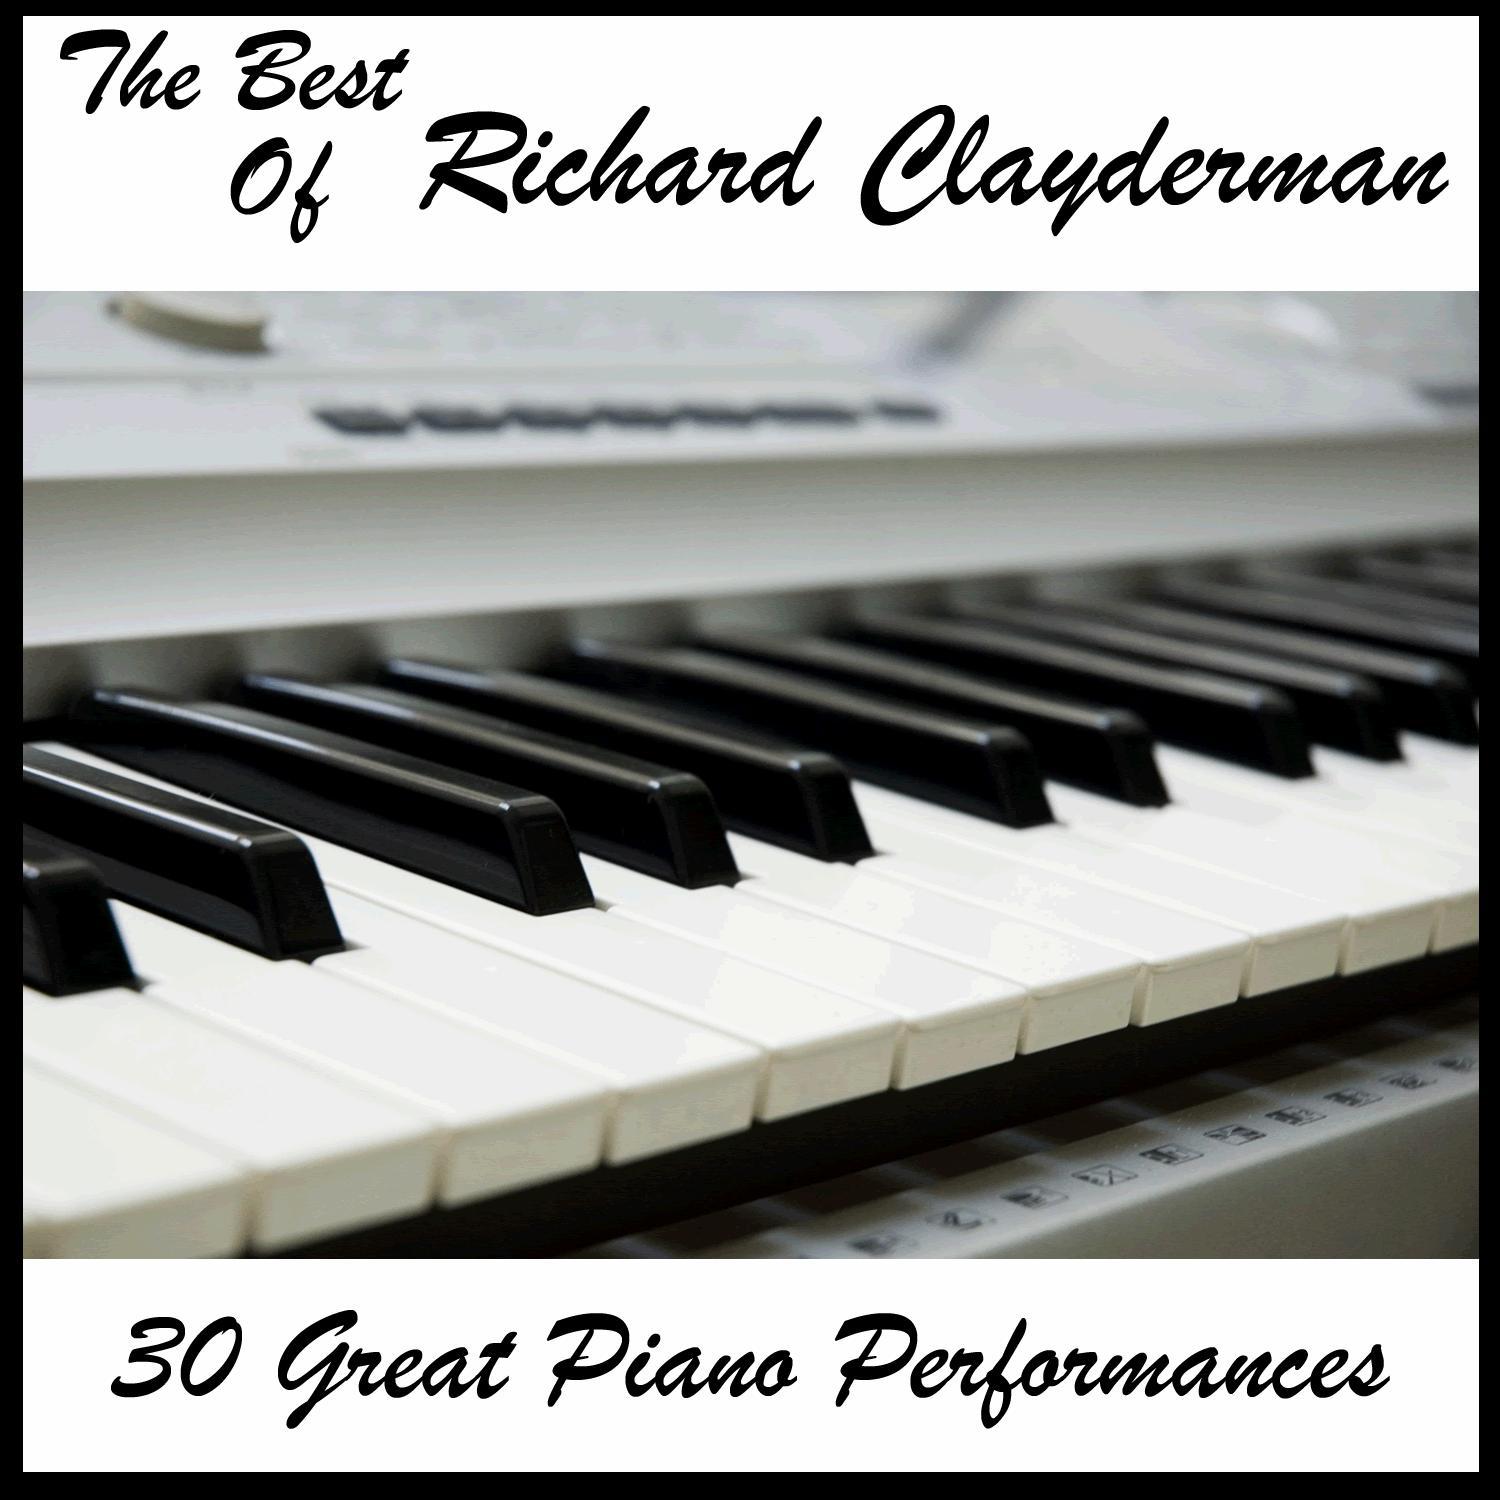 Richard Clayderman's Favorites: 30 Relaxing Songs for Piano